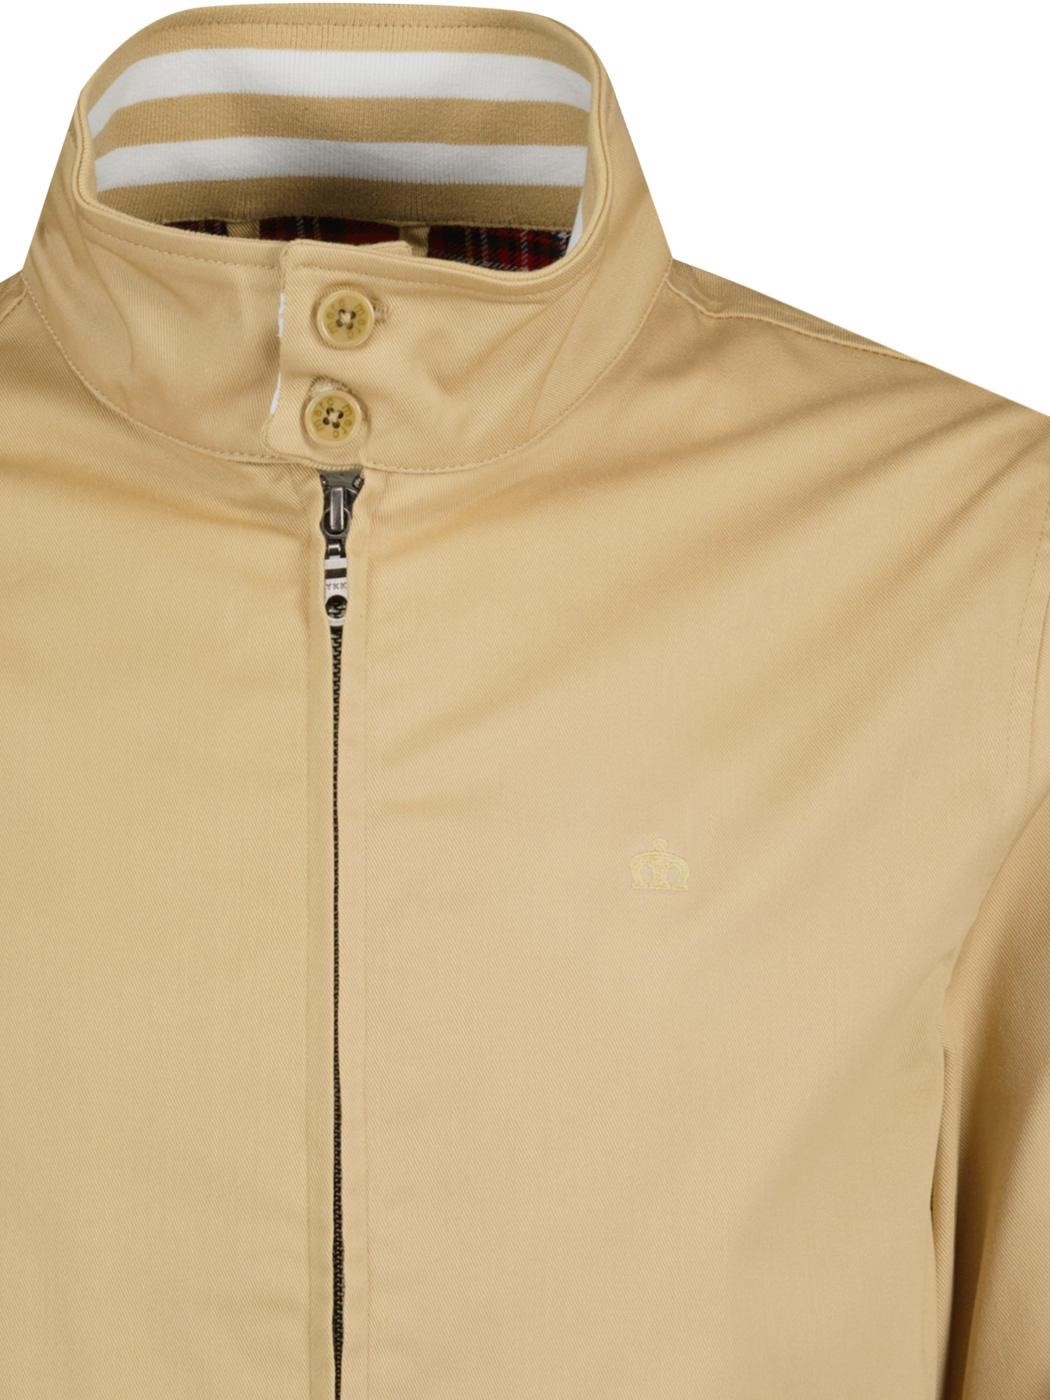 Куртка Merc Харрингтон (Harrington) Dunston, расцветка tan (желтовато-коричневый)